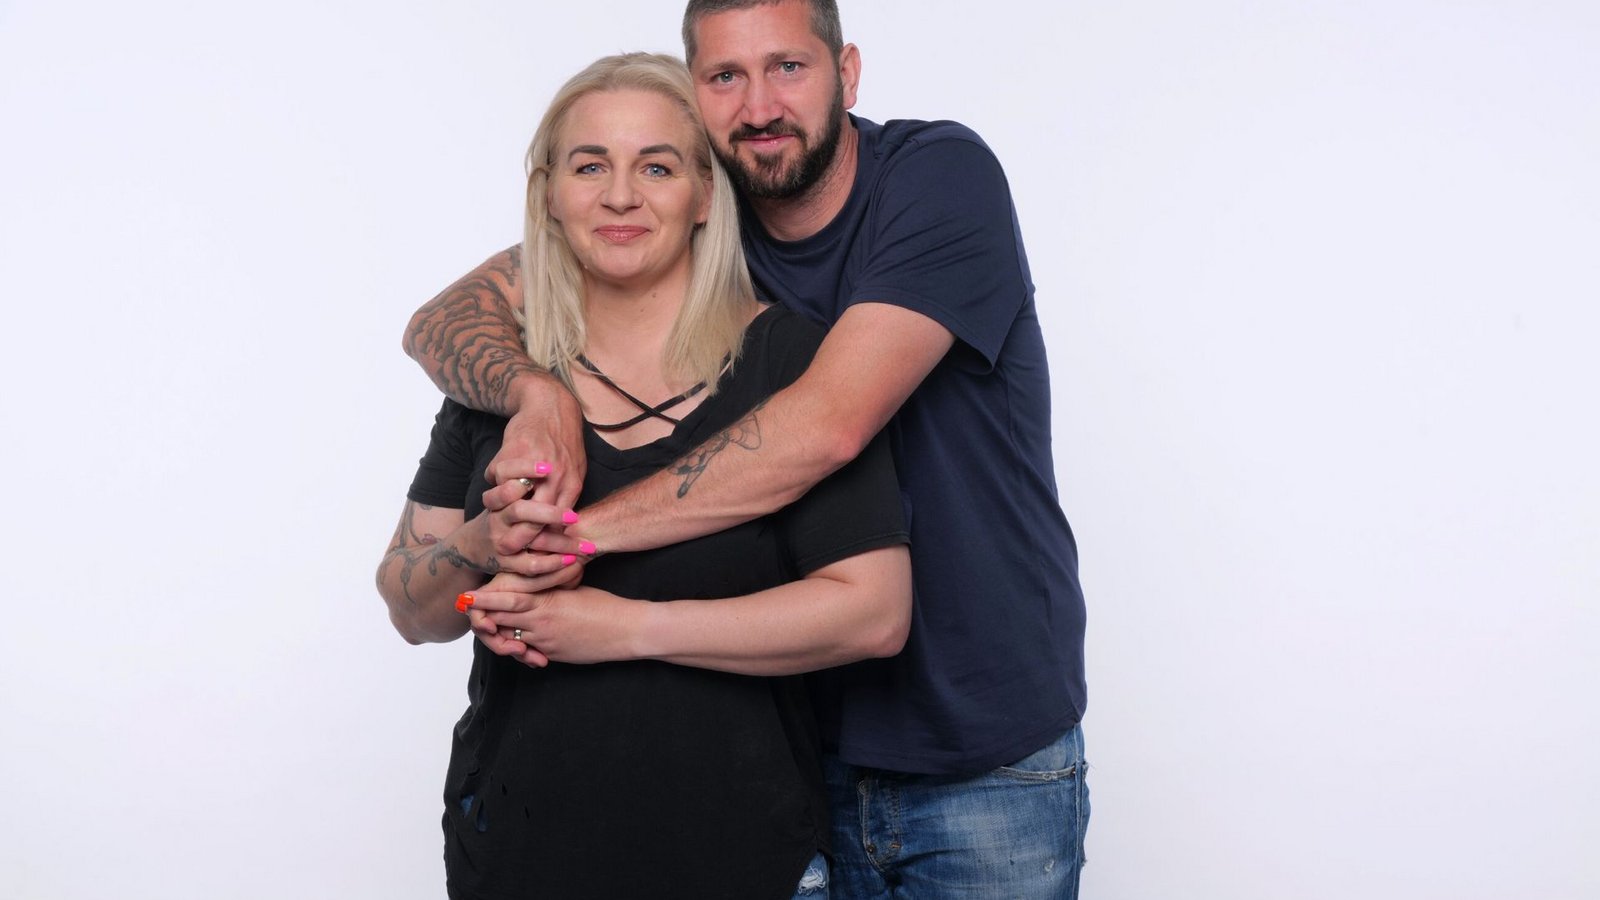 ... Fußball-Original Sascha Mölders (37) und Yvonne Mölders (42).Foto: RTL/Stefan Gregorowius